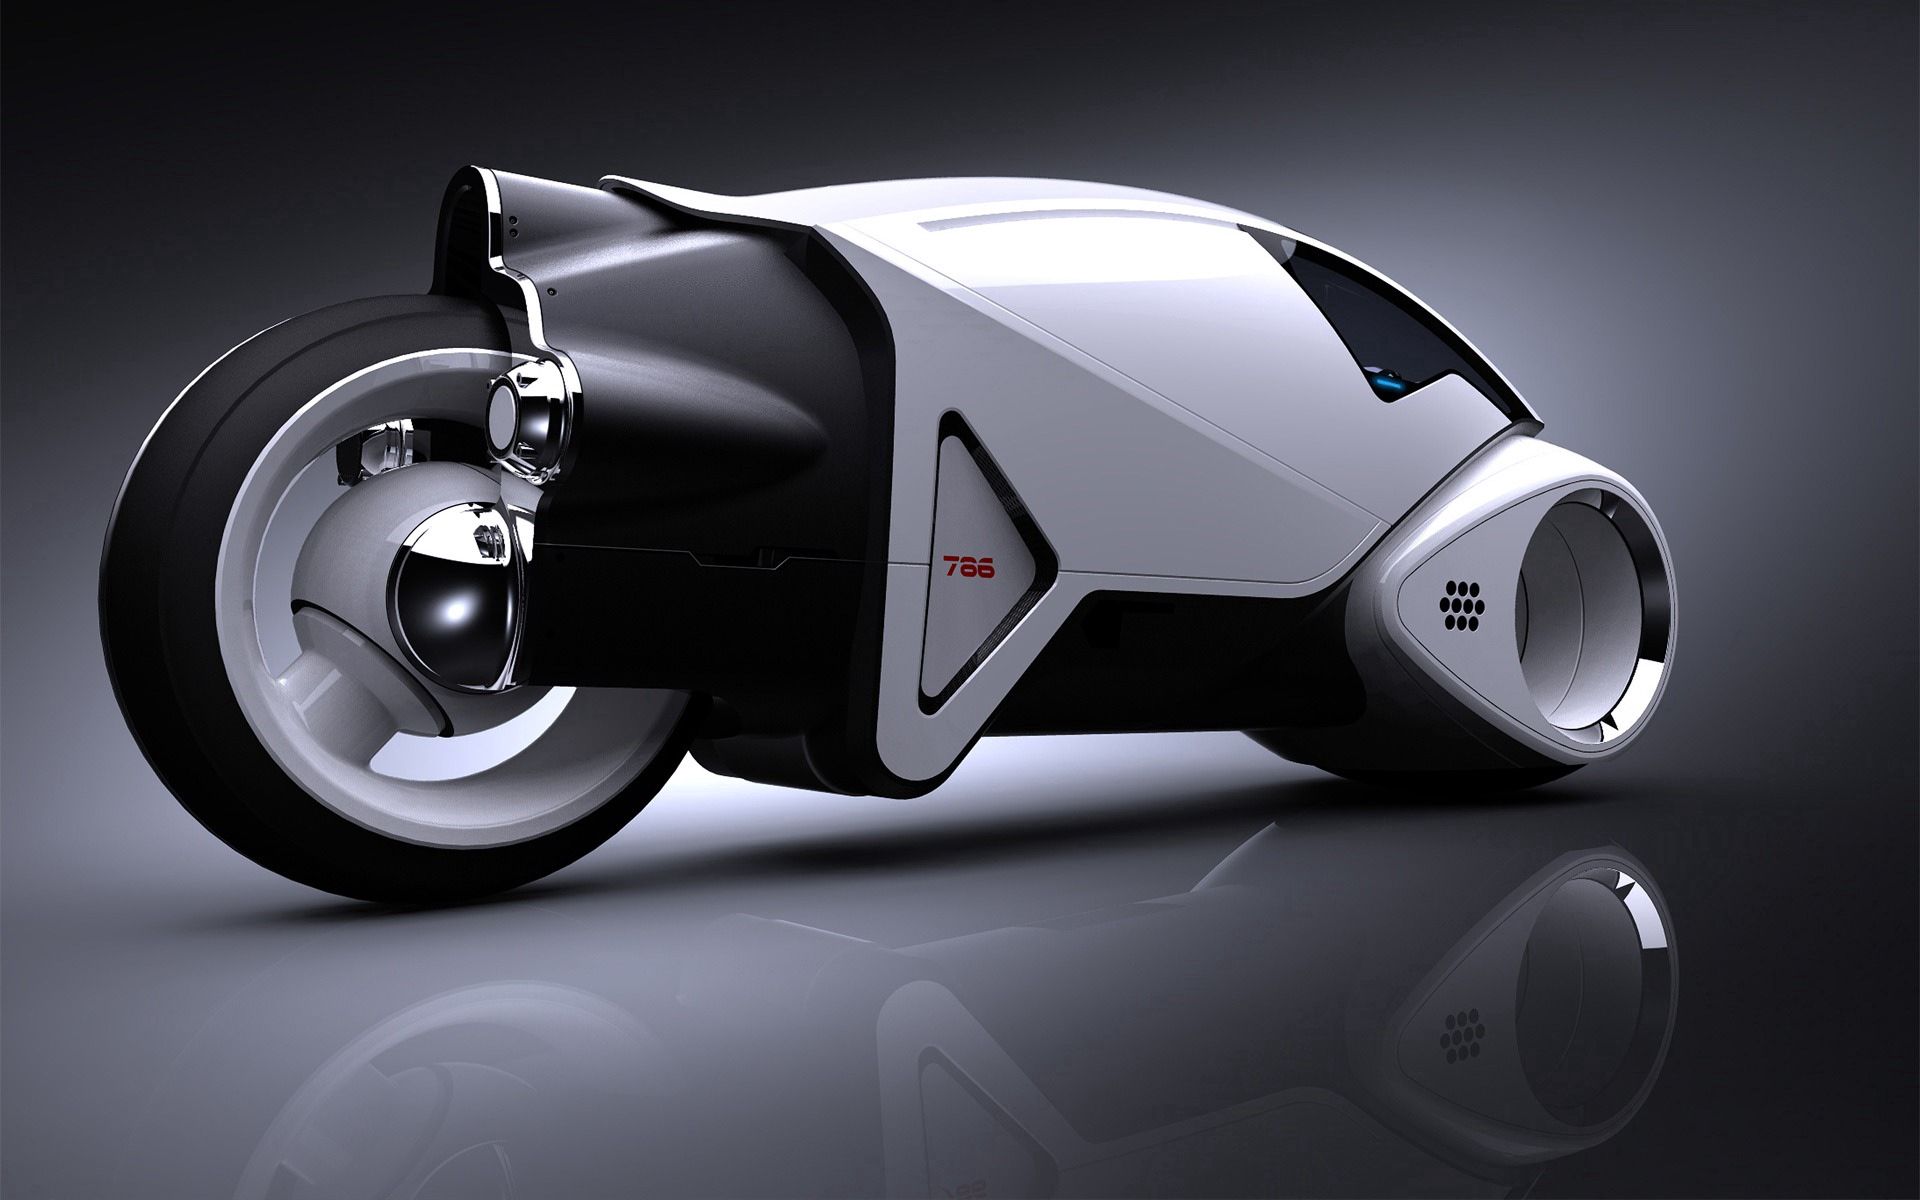 90551 descargar imagen 3d, concepto, motocicleta, futuro, prototipo: fondos de pantalla y protectores de pantalla gratis